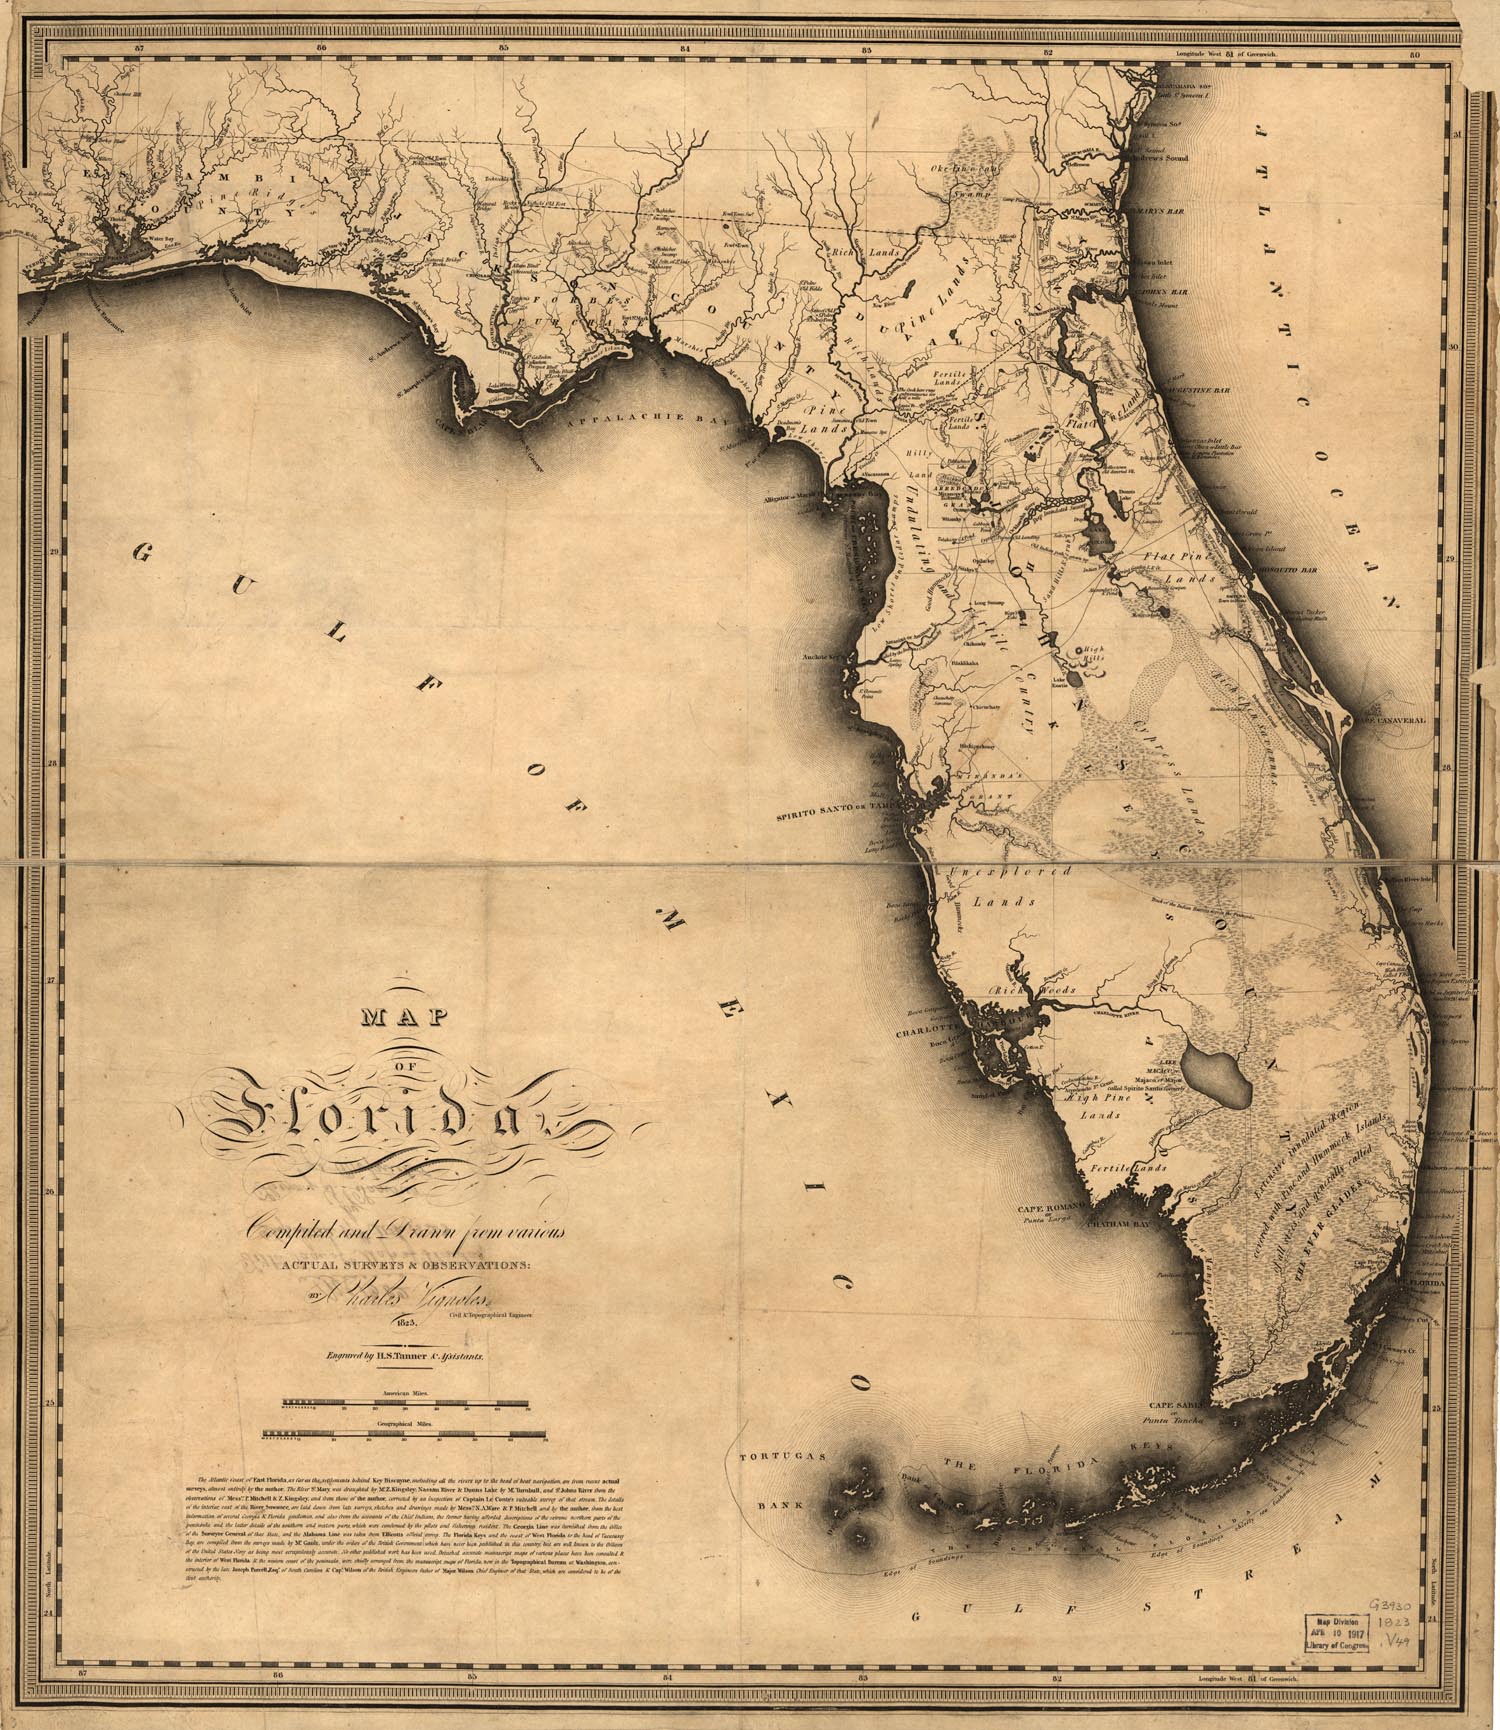 Florida Territory